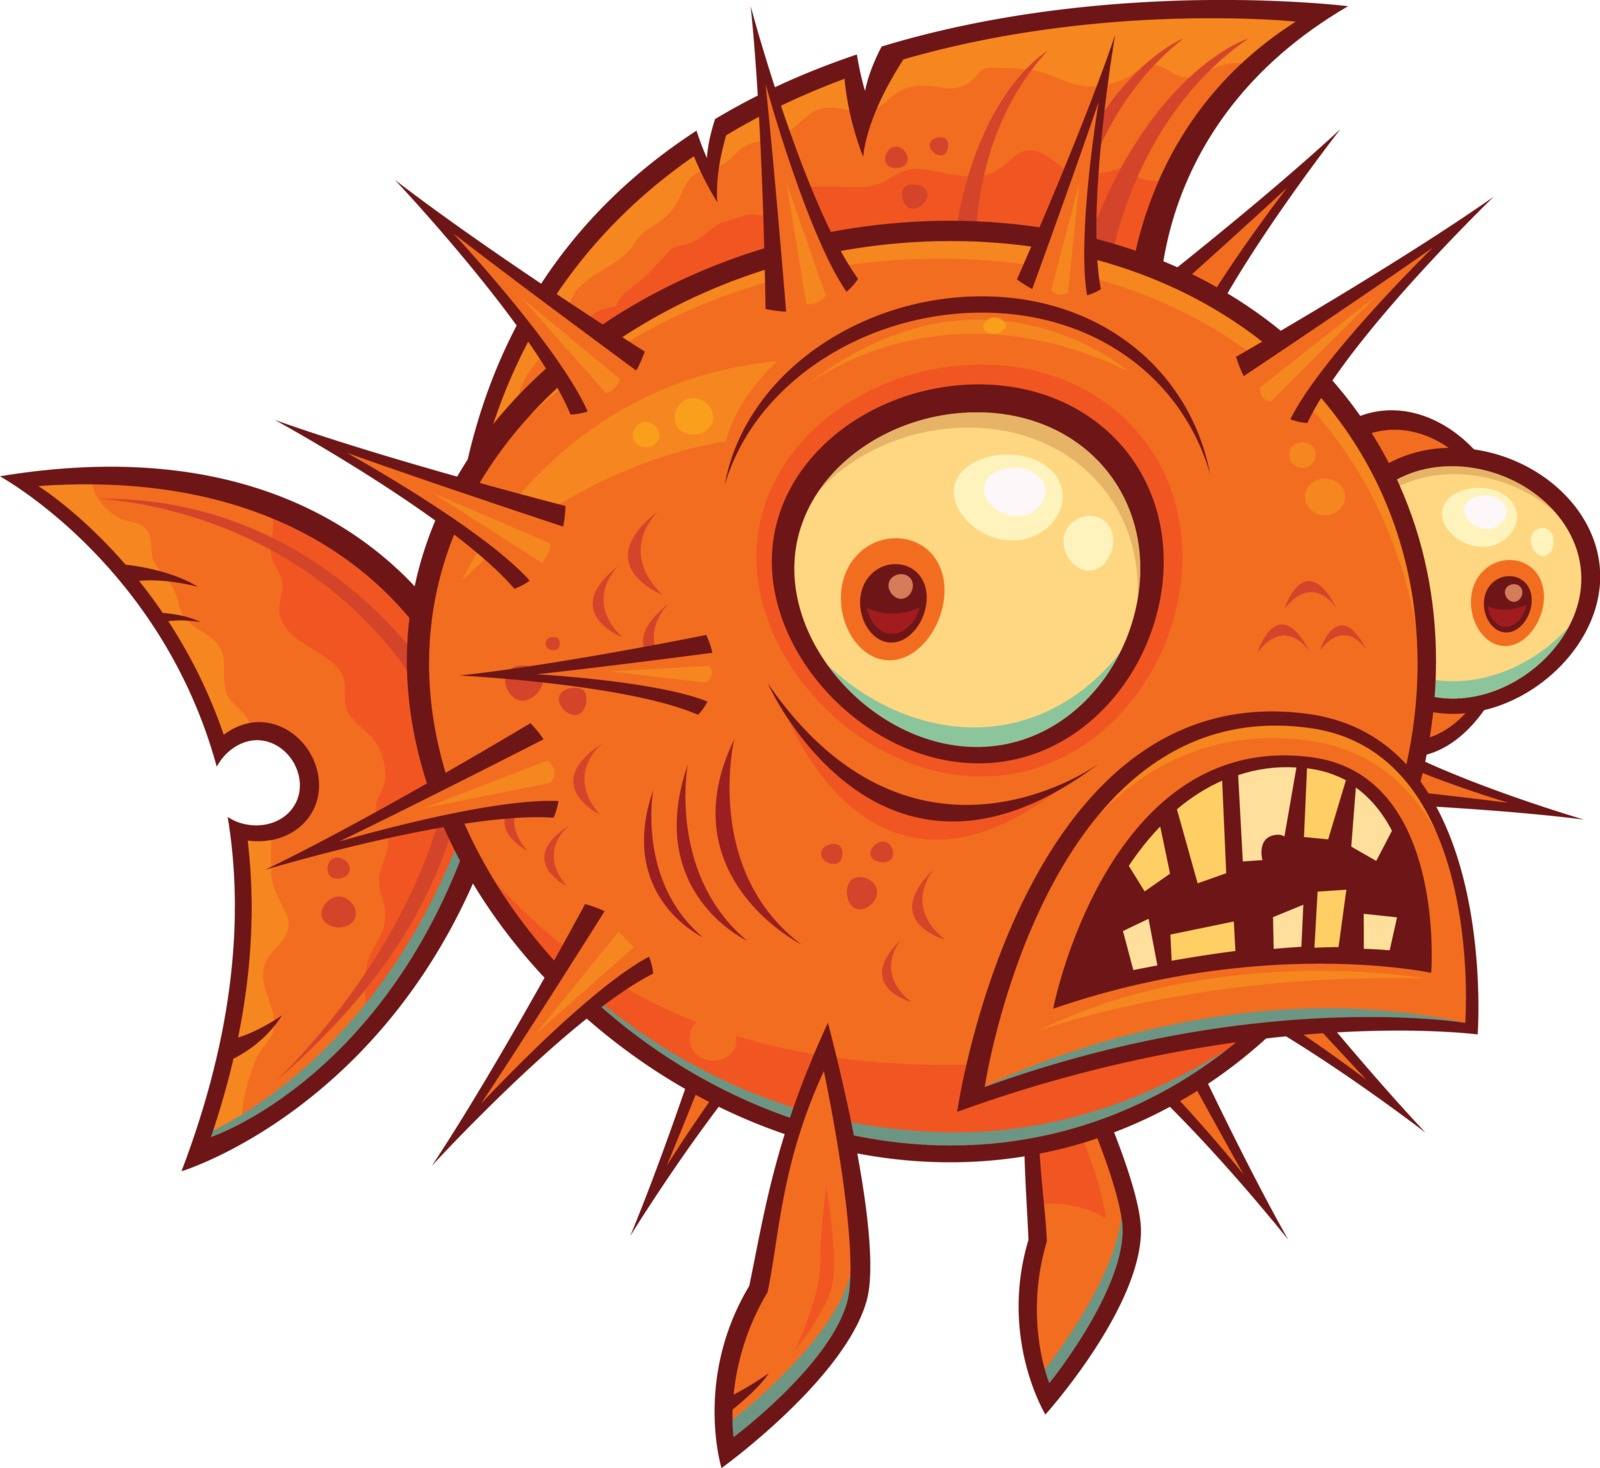 Vector cartoon illustration of a wacky pufferfish or blowfish.